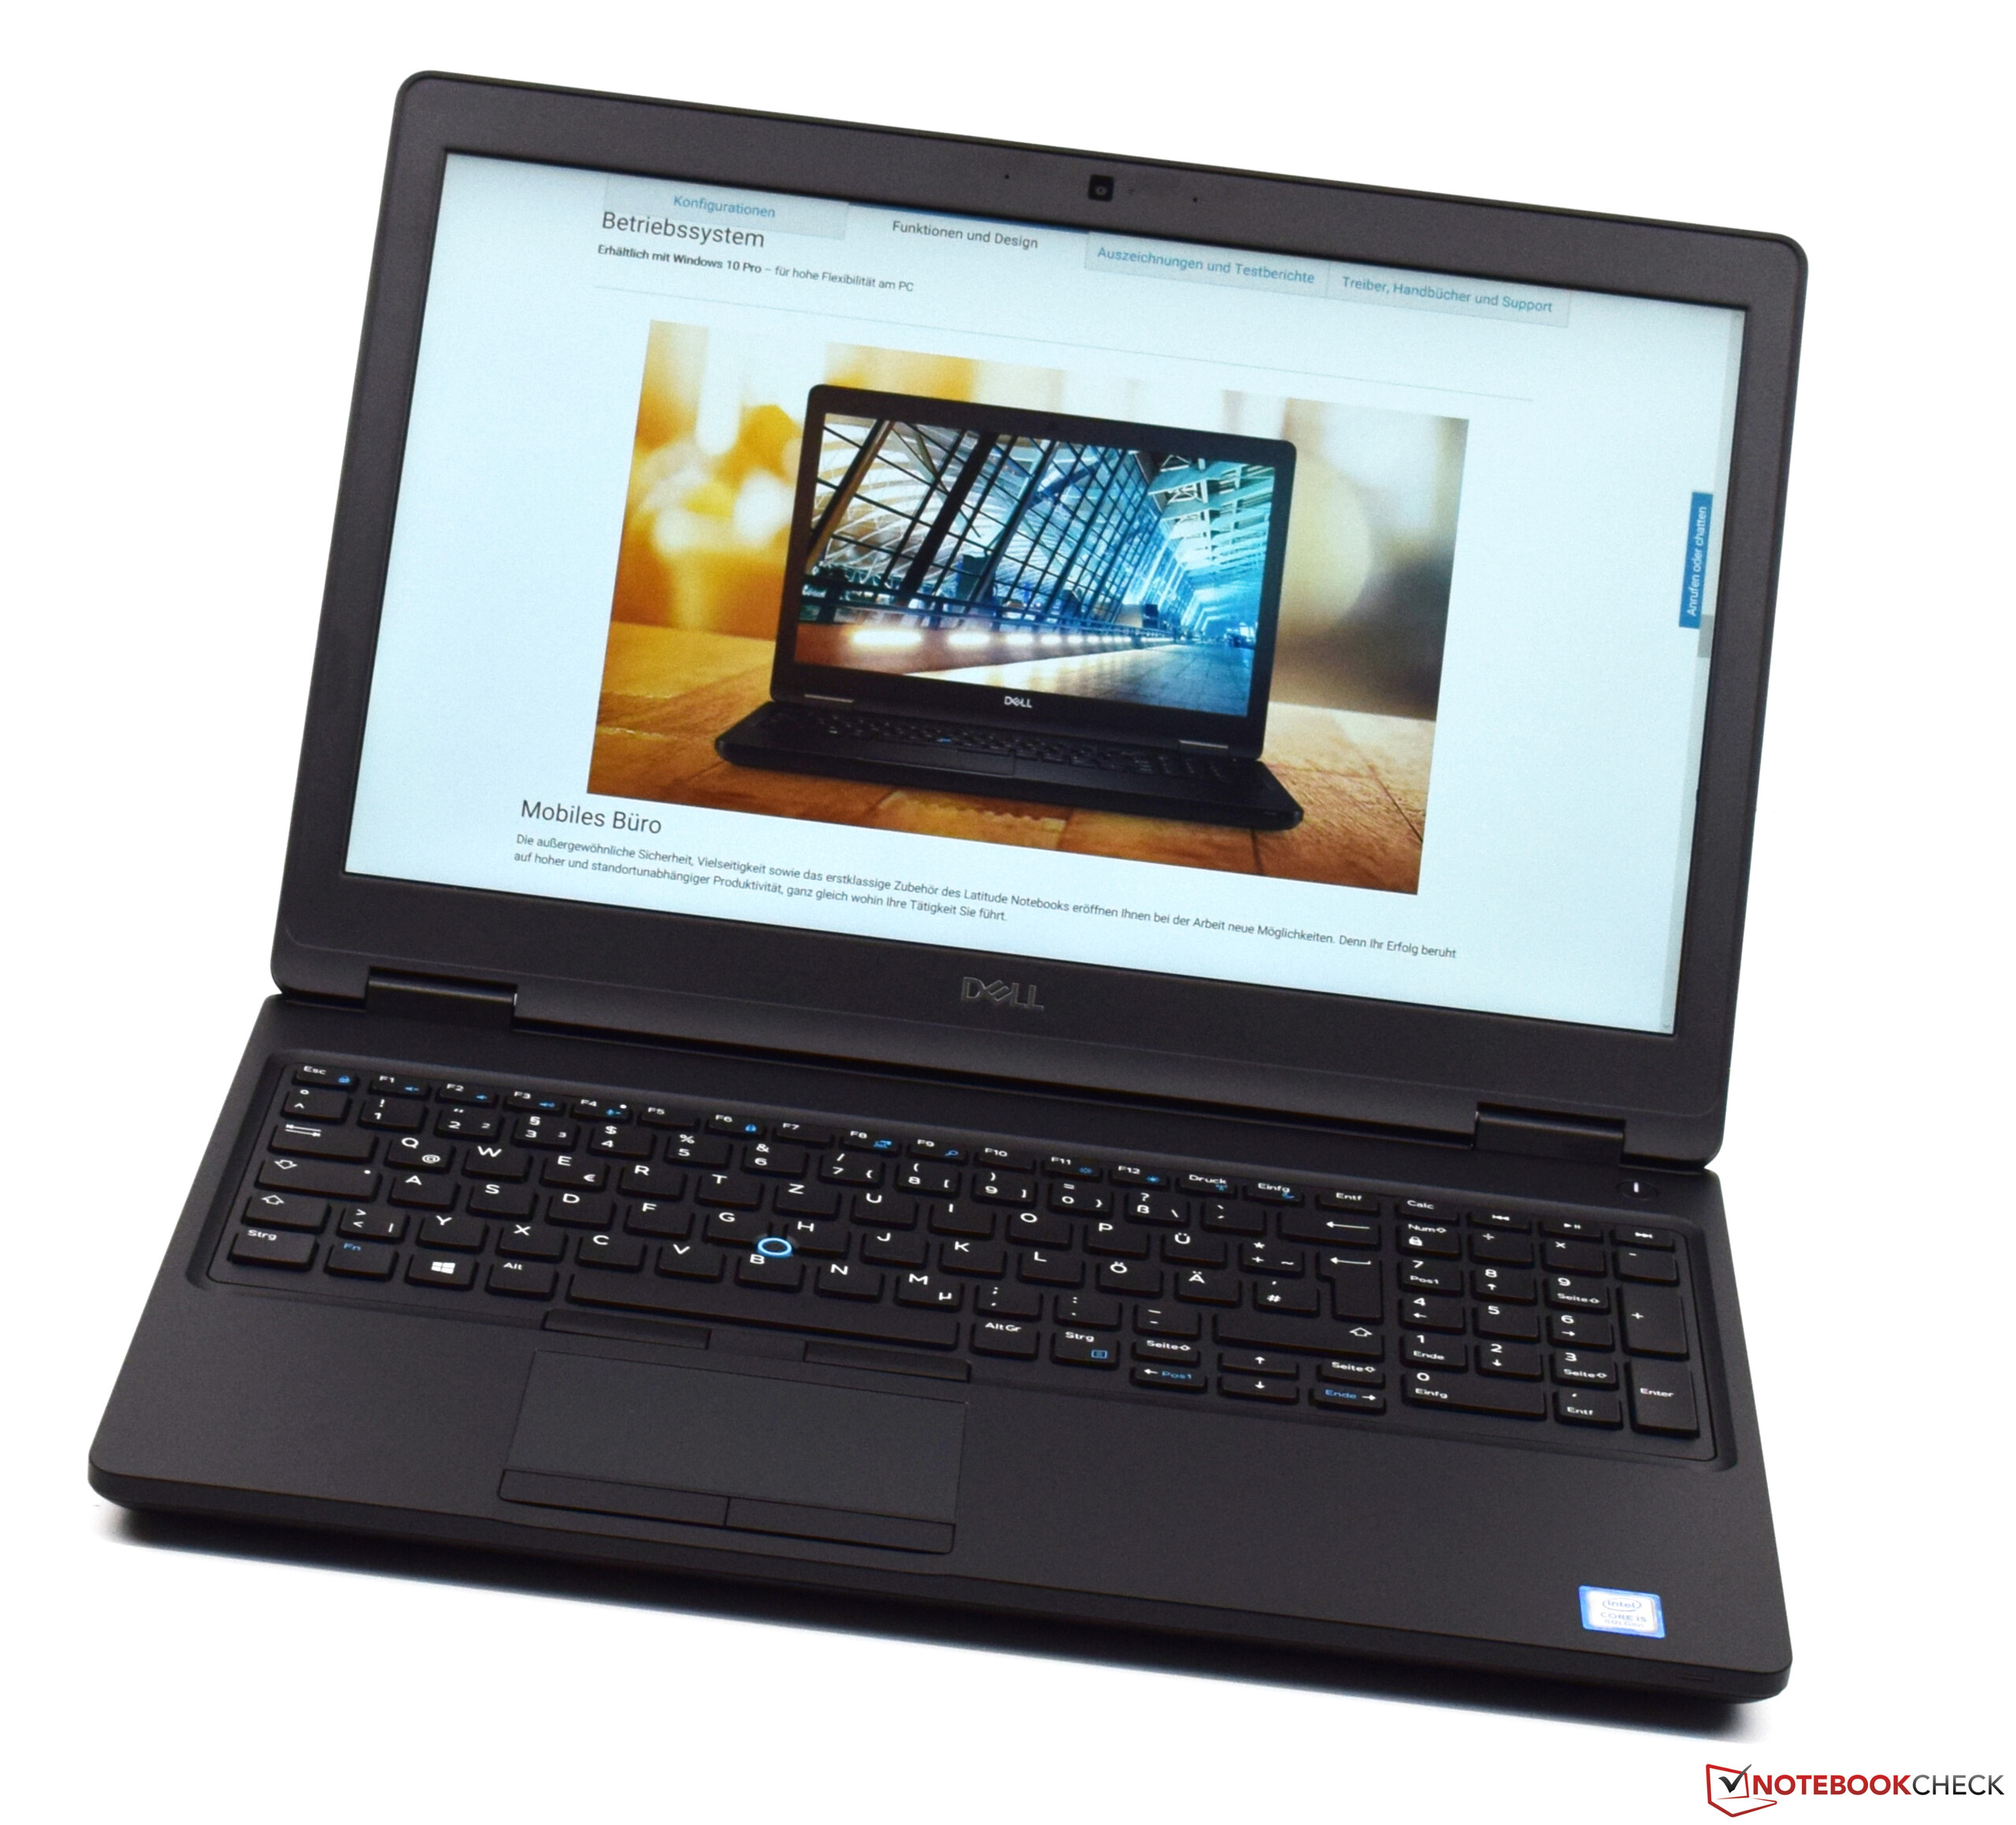 Laptop Dell Latitude 5590